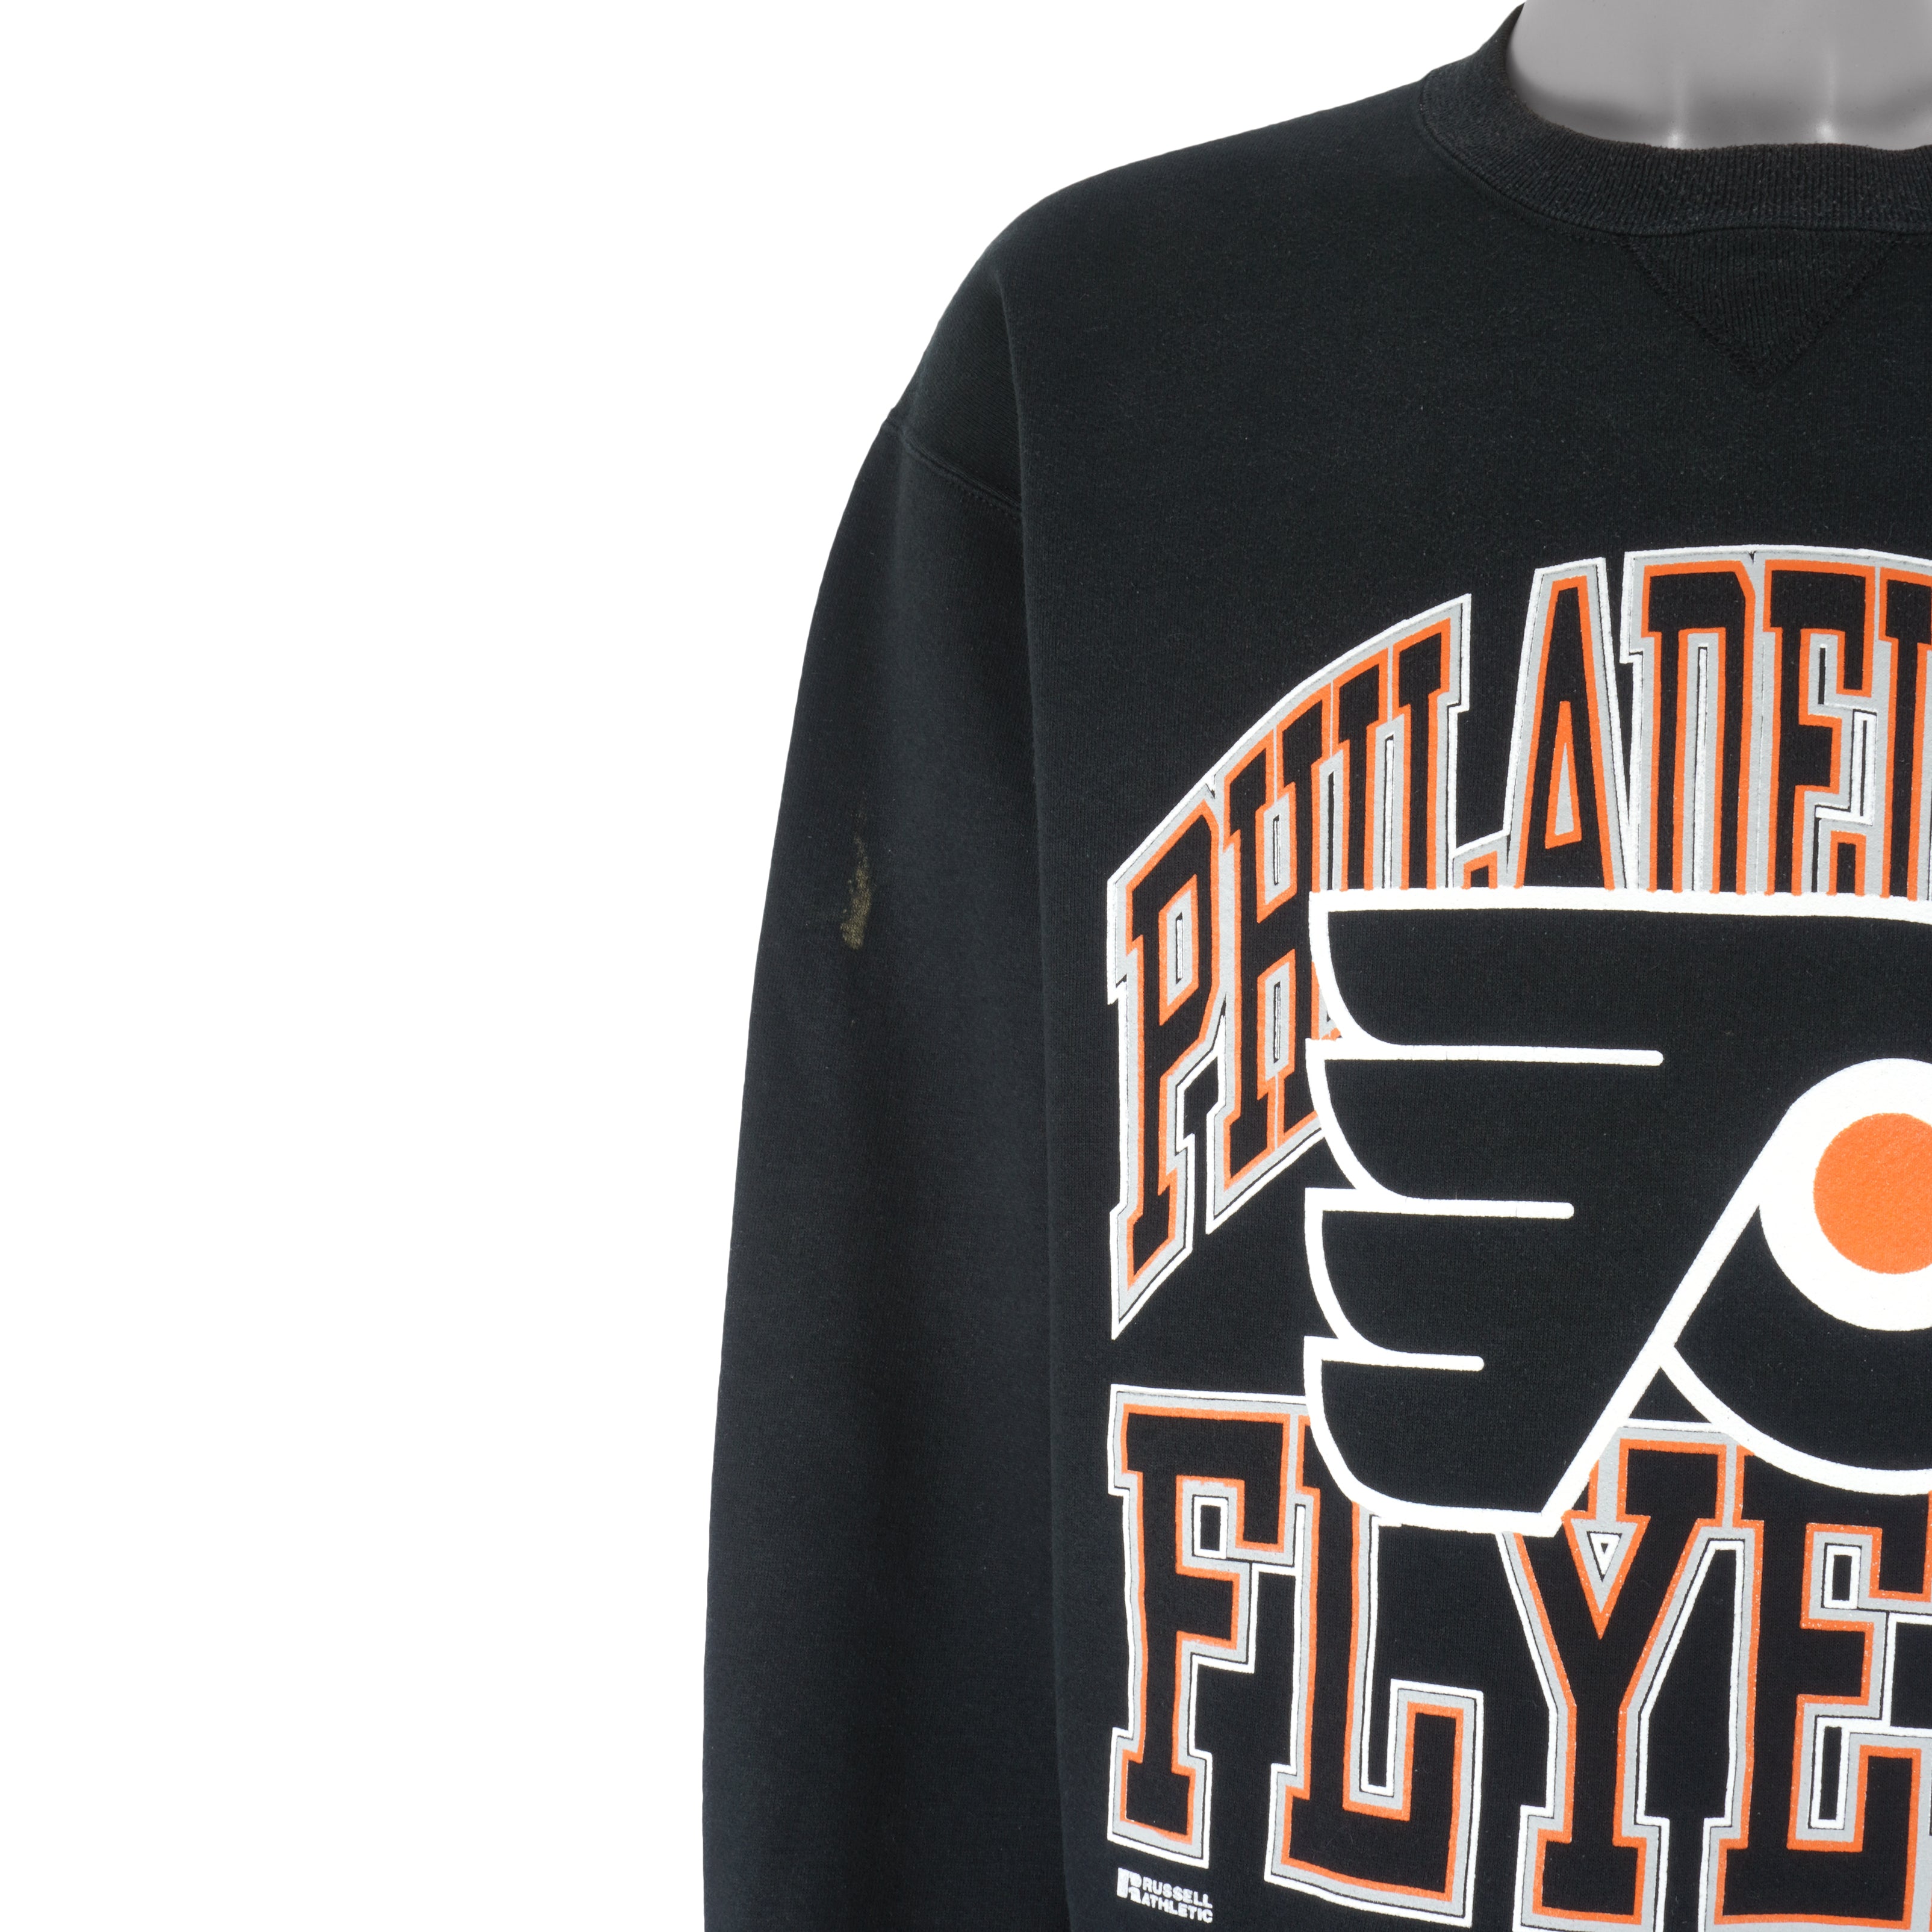 Flyers shirt, Philadelphia Flyers, Philadelphia Flyers crewneck